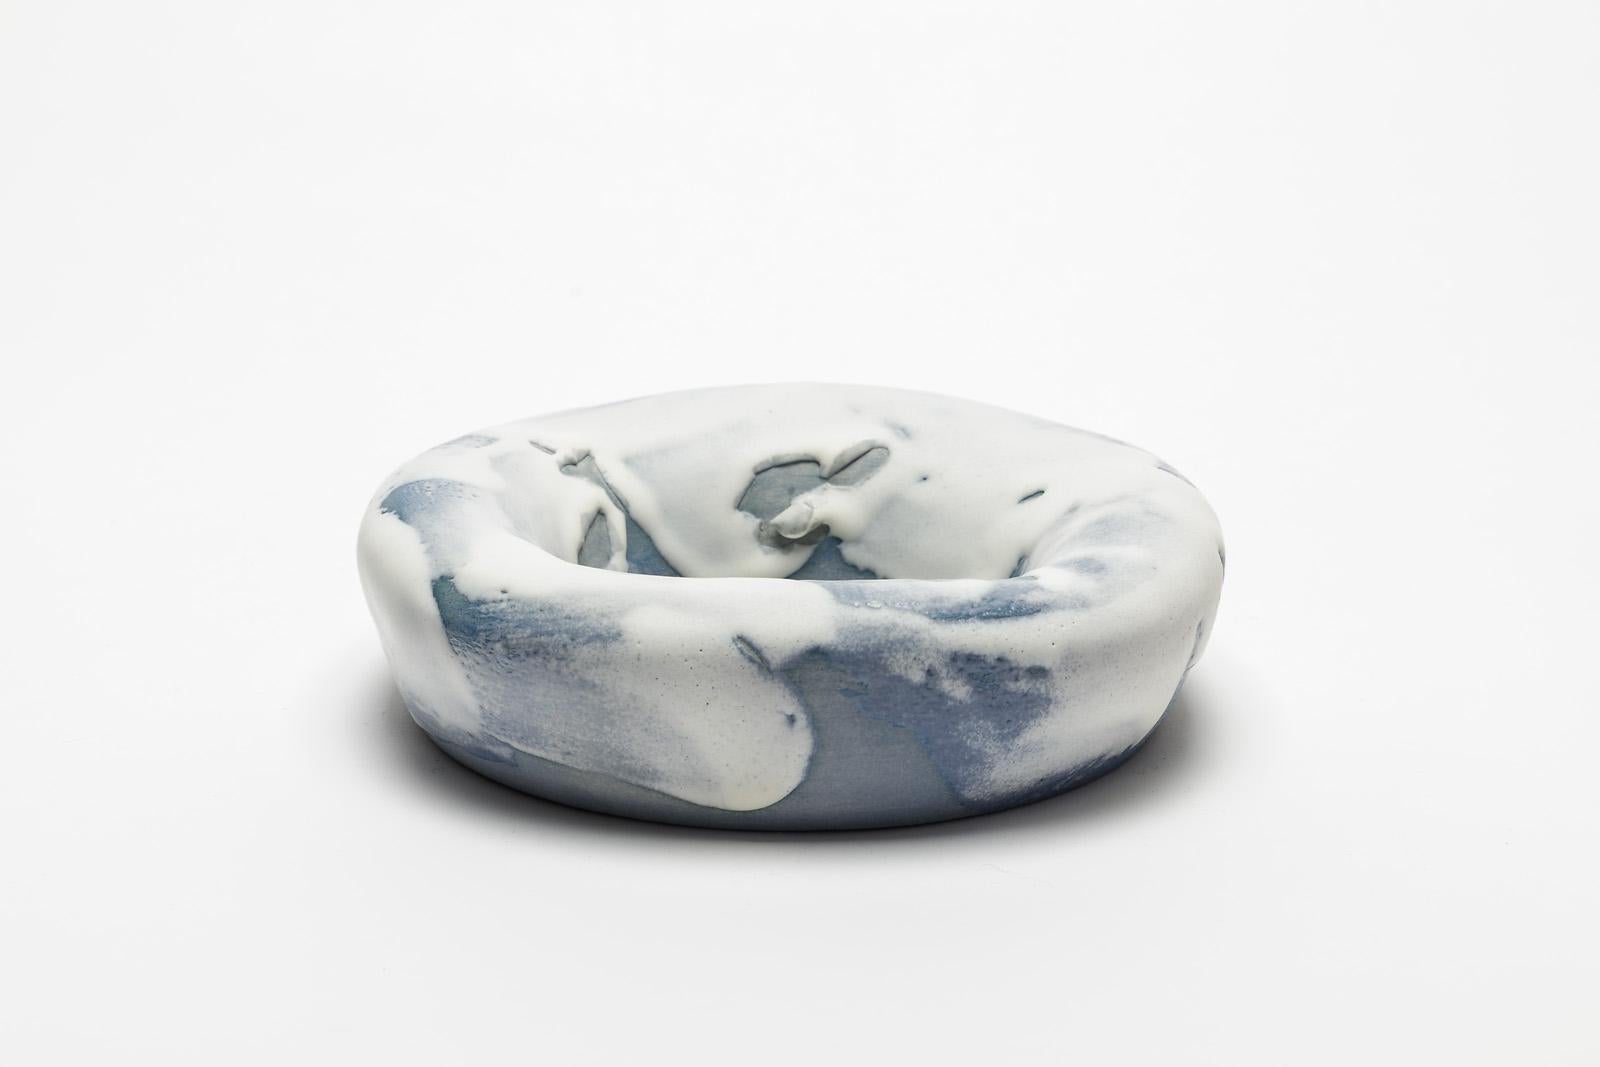 A ceramic mirror with white and blue glazes decoration by Mia Jensen.
Unique piece.
Signed under the base.
Unique piece,
circa 2019.